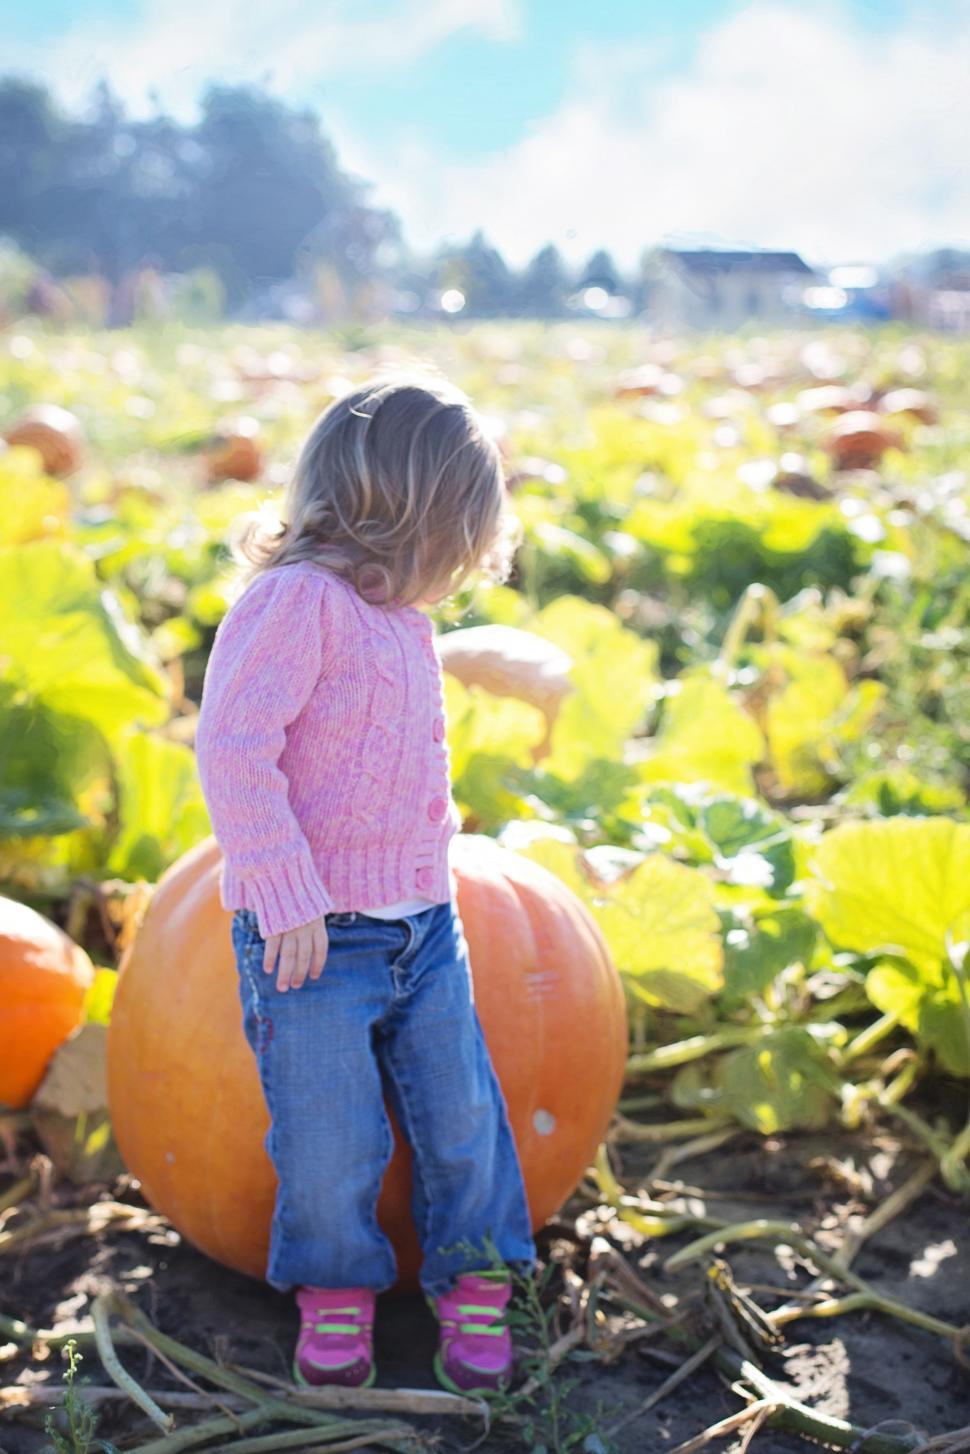 Free Image of Little Child with Orange Pumpkin 